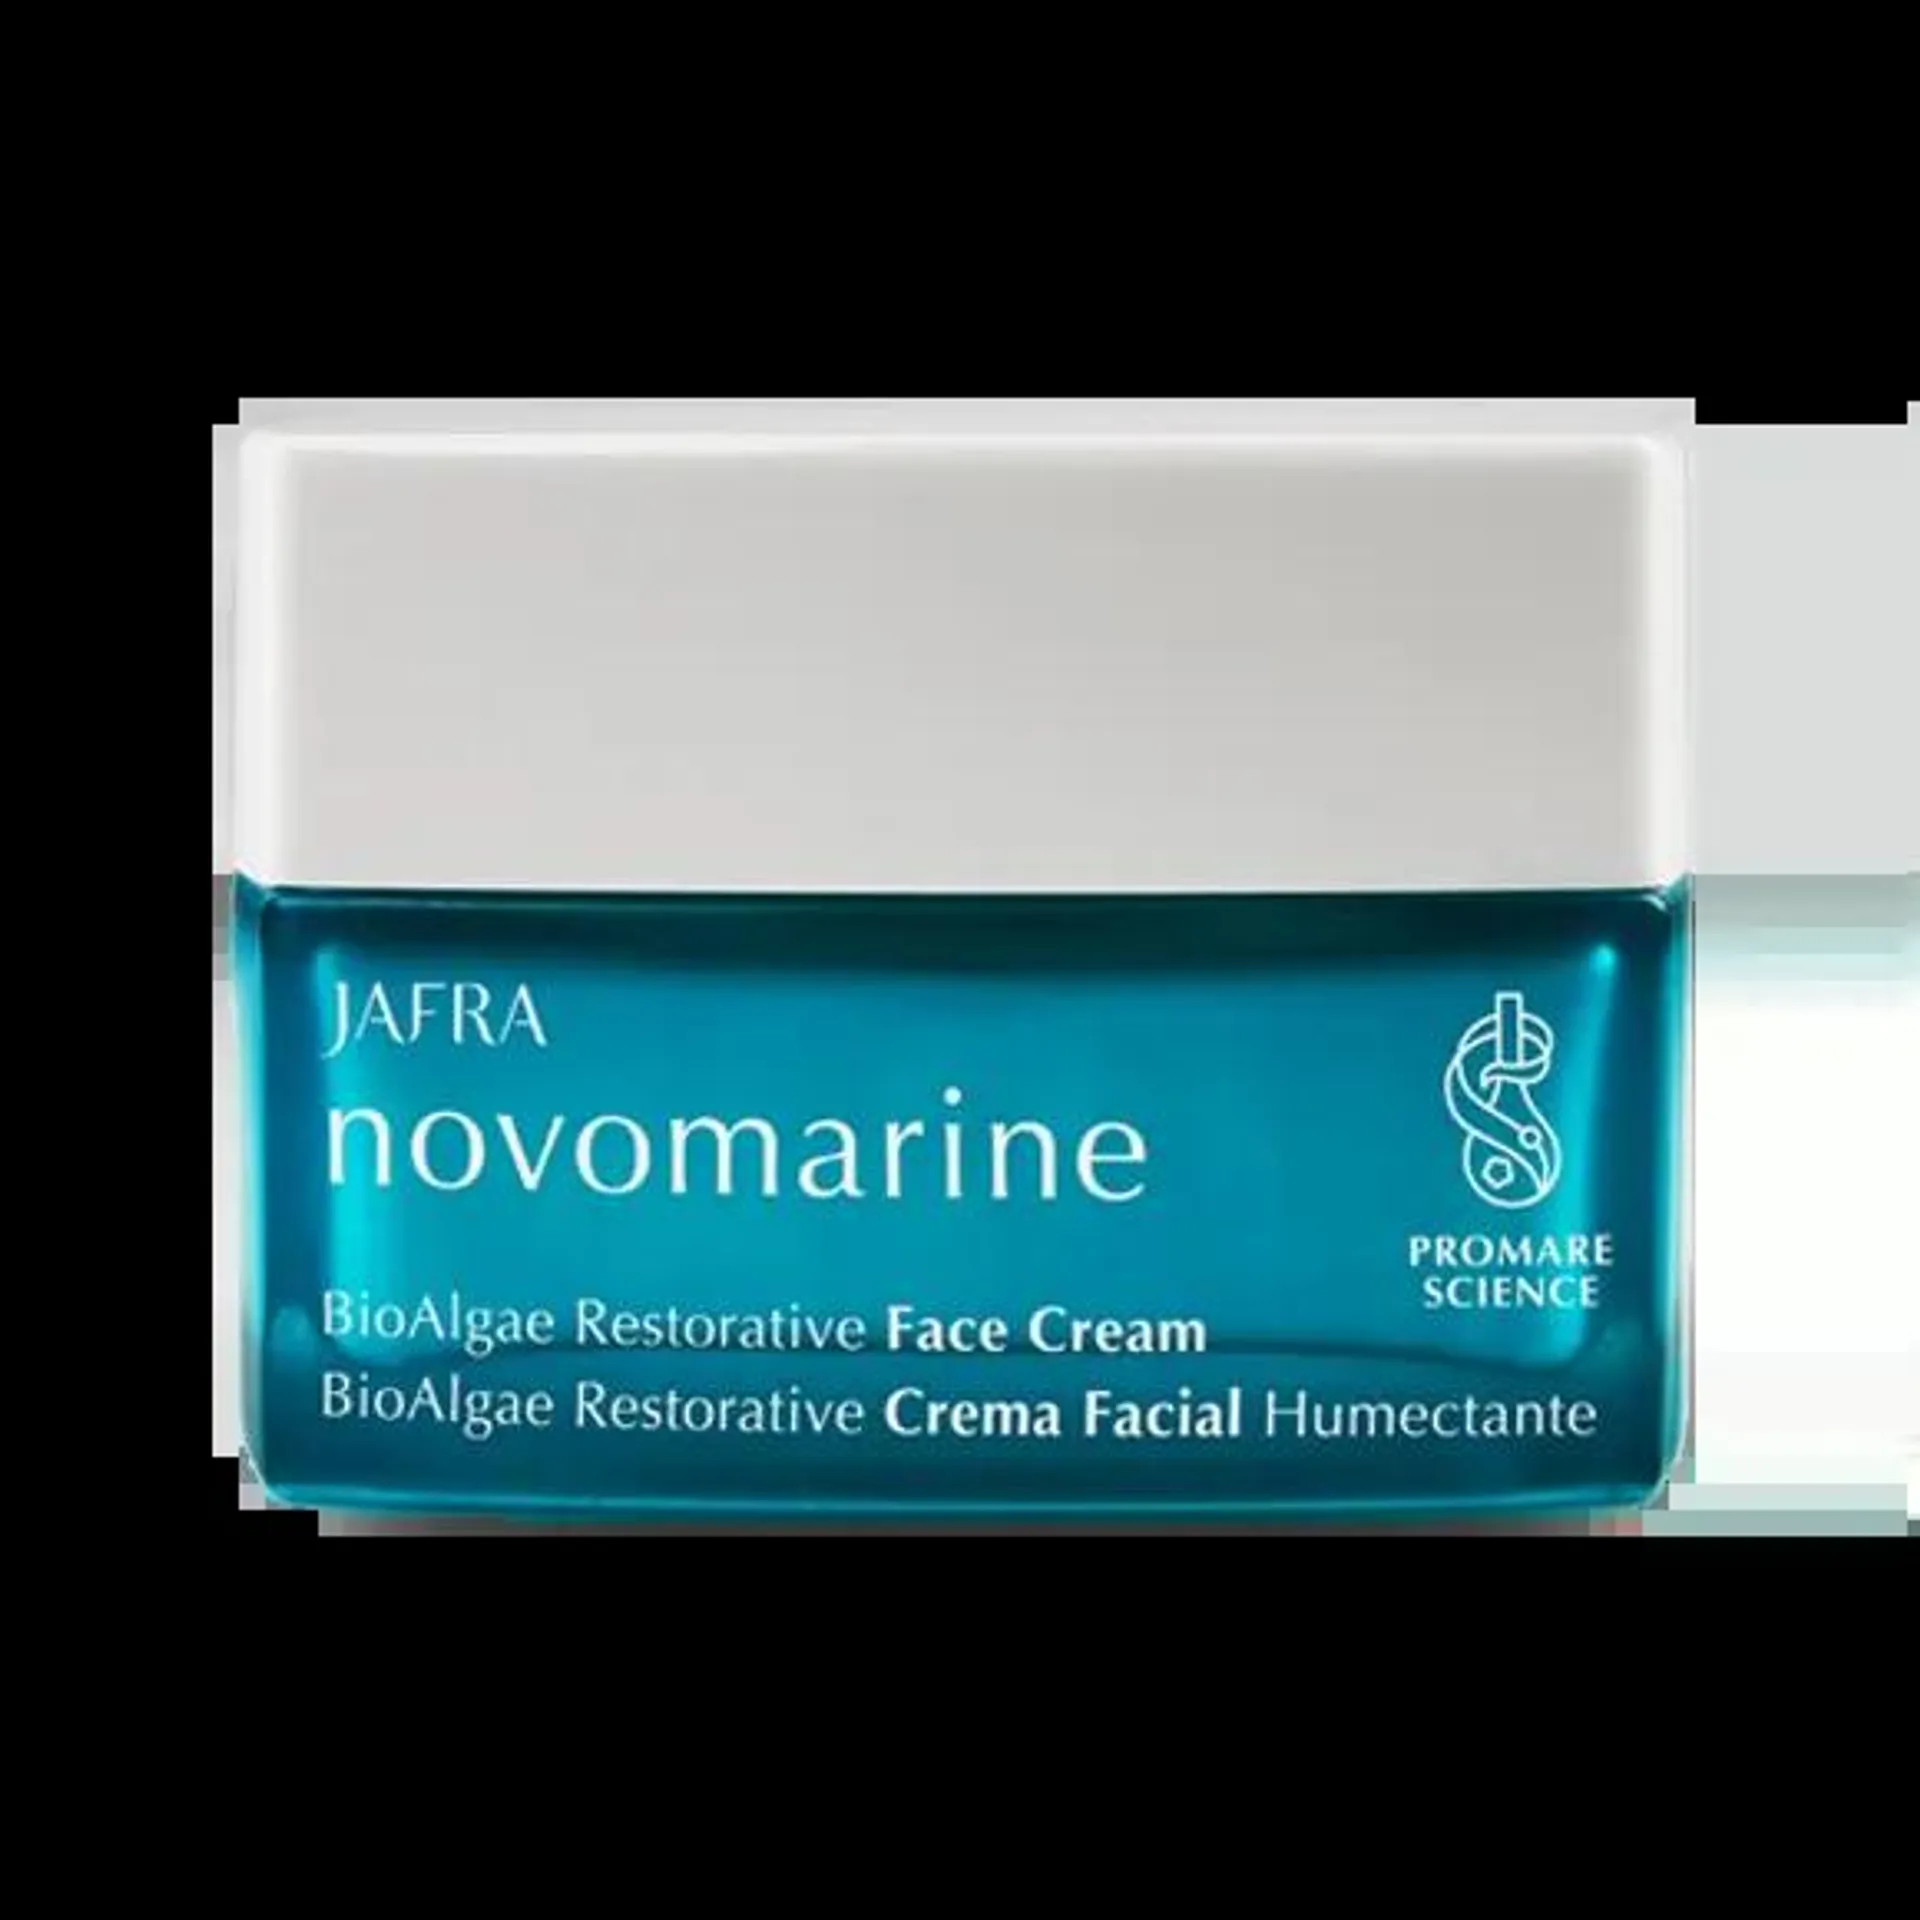 JAFRA Novomarine BioAlgae Restorative Crema Facial Humectante